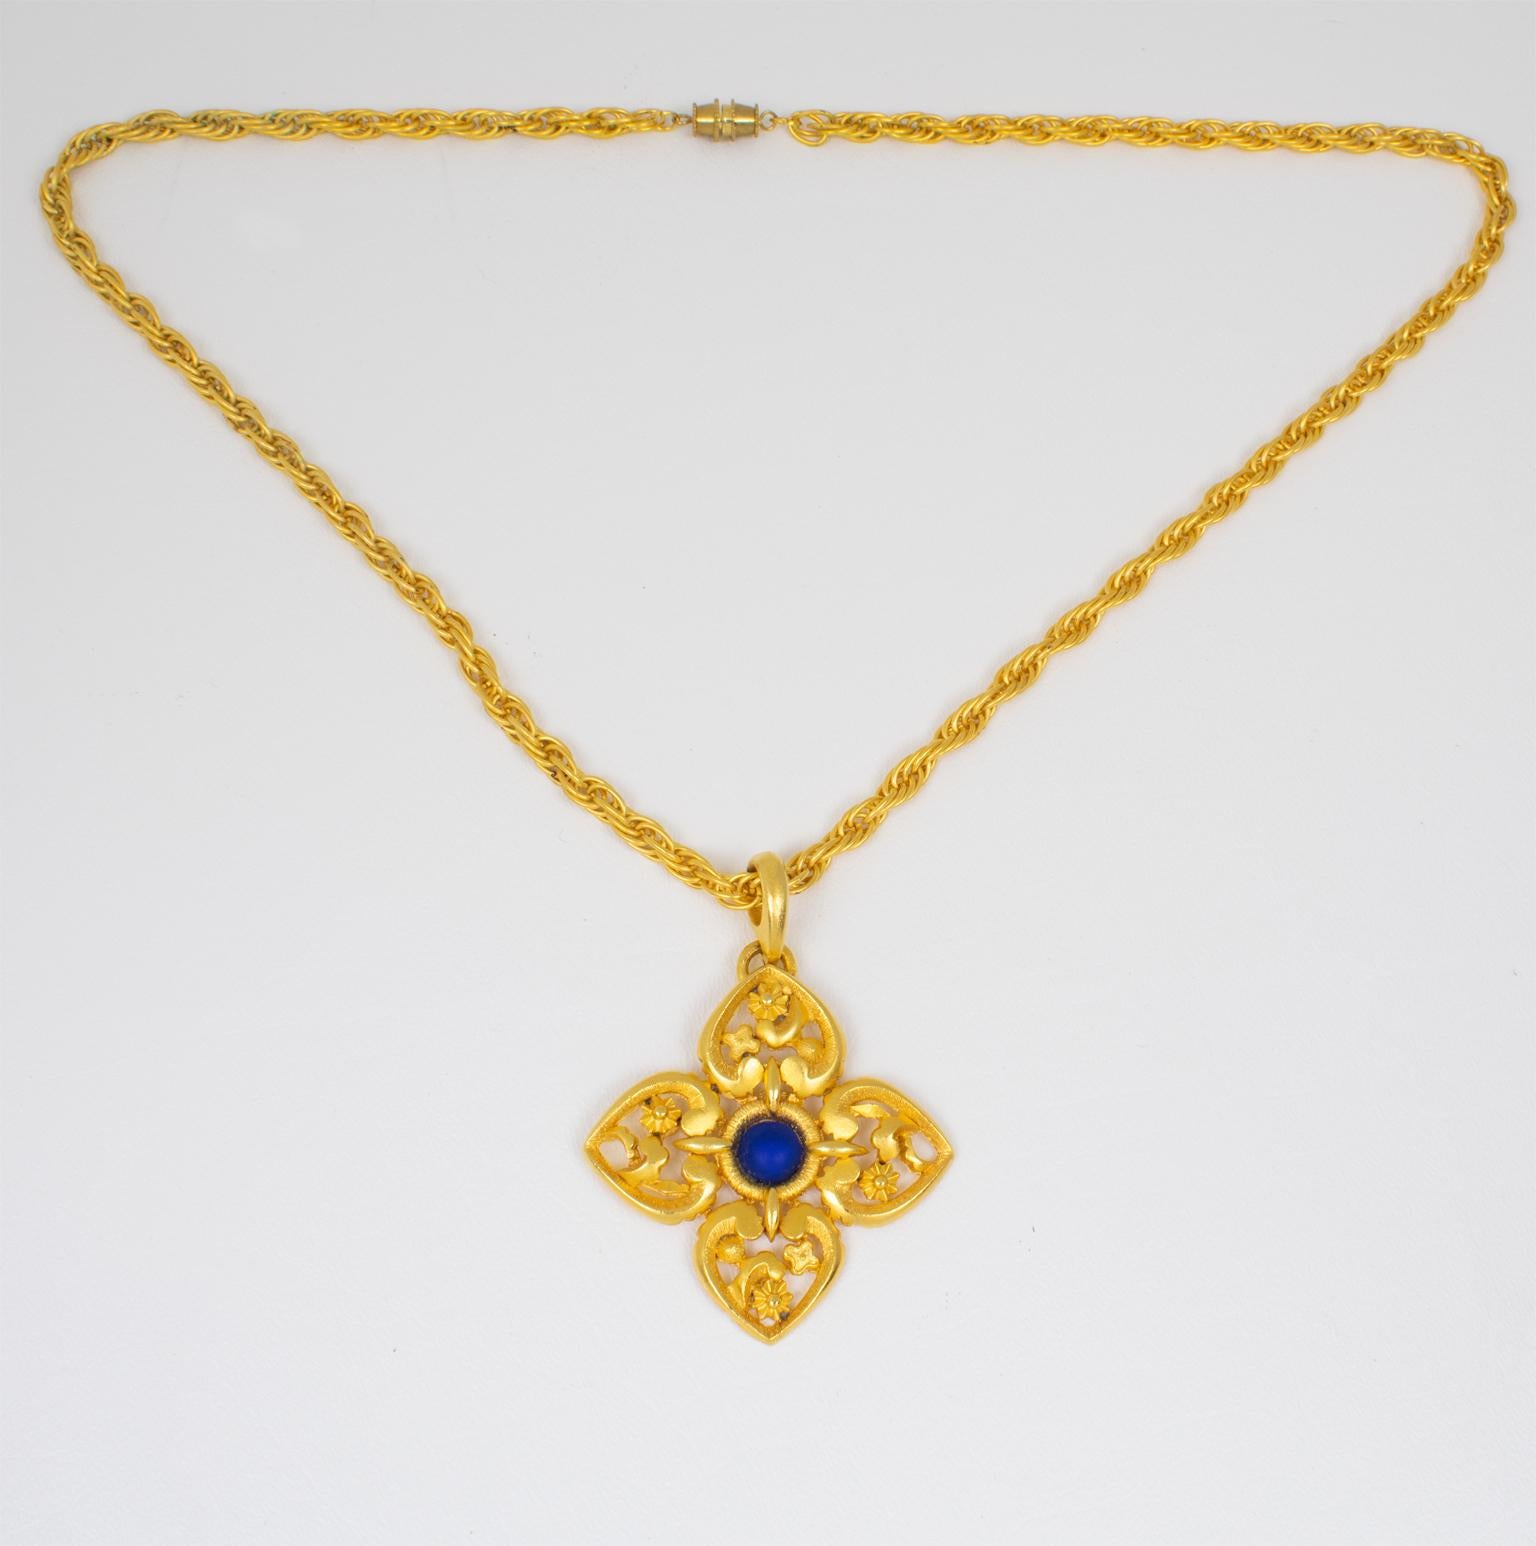 Lanvin Paris Gilt Metal Pendant Necklace with Blue Poured Glass Cabochon In Excellent Condition For Sale In Atlanta, GA